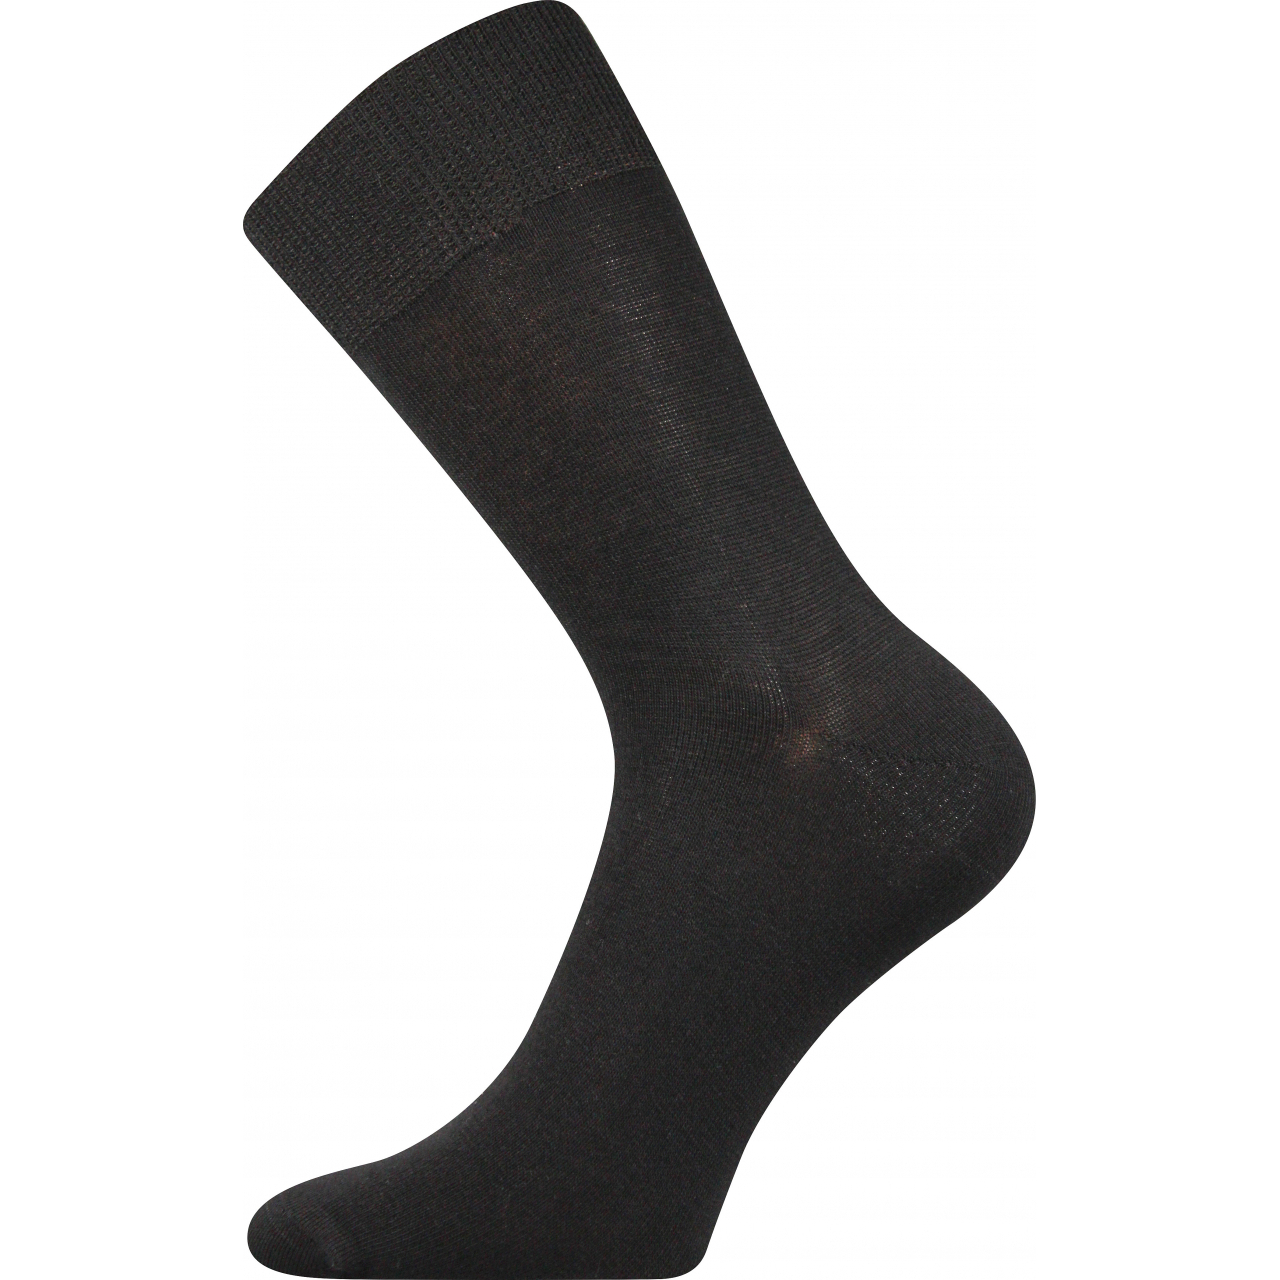 Ponožky unisex klasické Boma Radovan-a - černé, 43-46